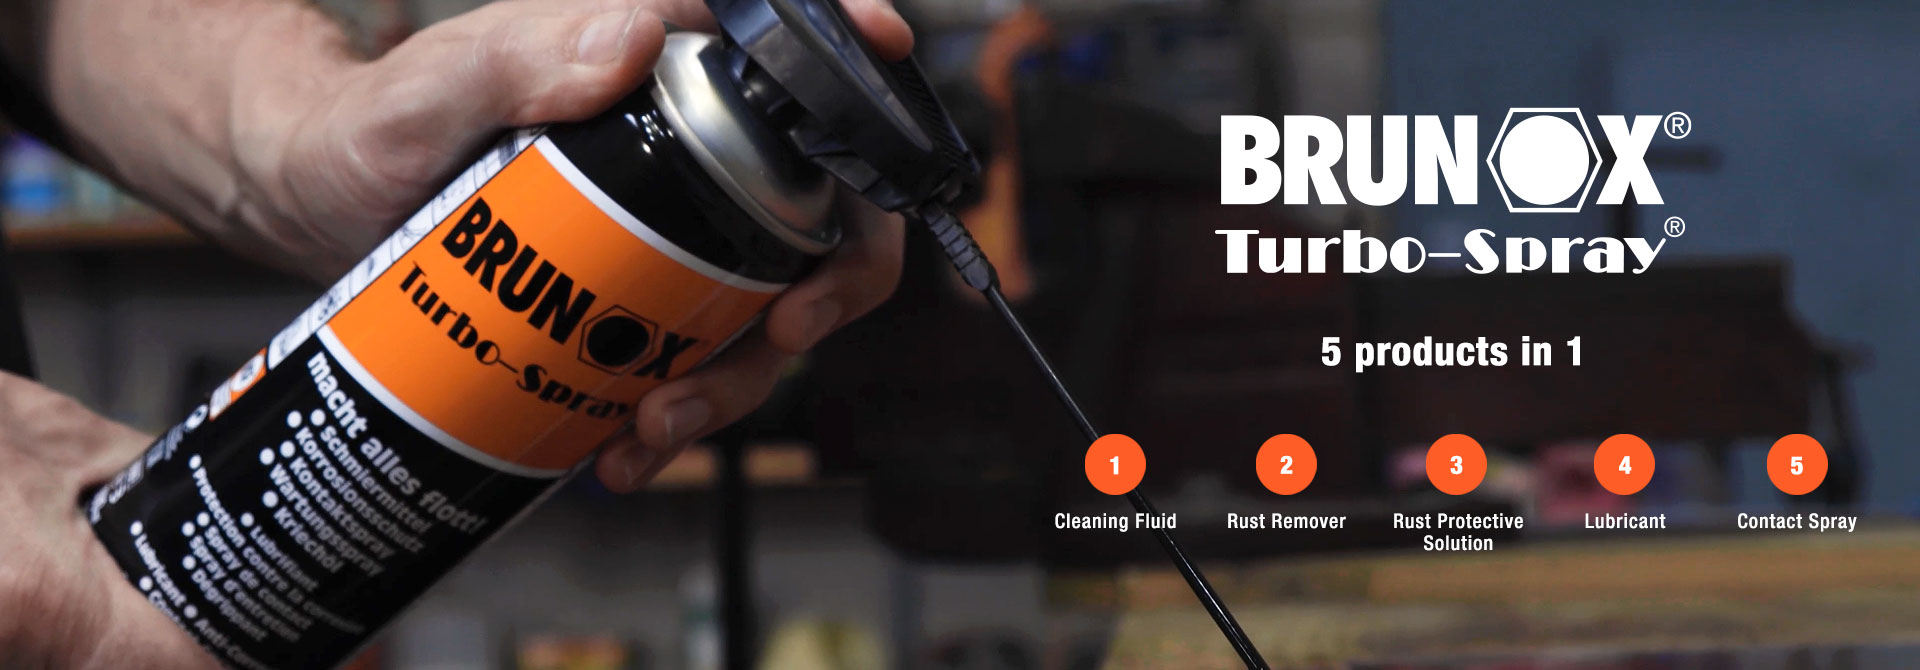 Brunox Australia - Rust Converting Epoxy Primer & Turbo-Spray